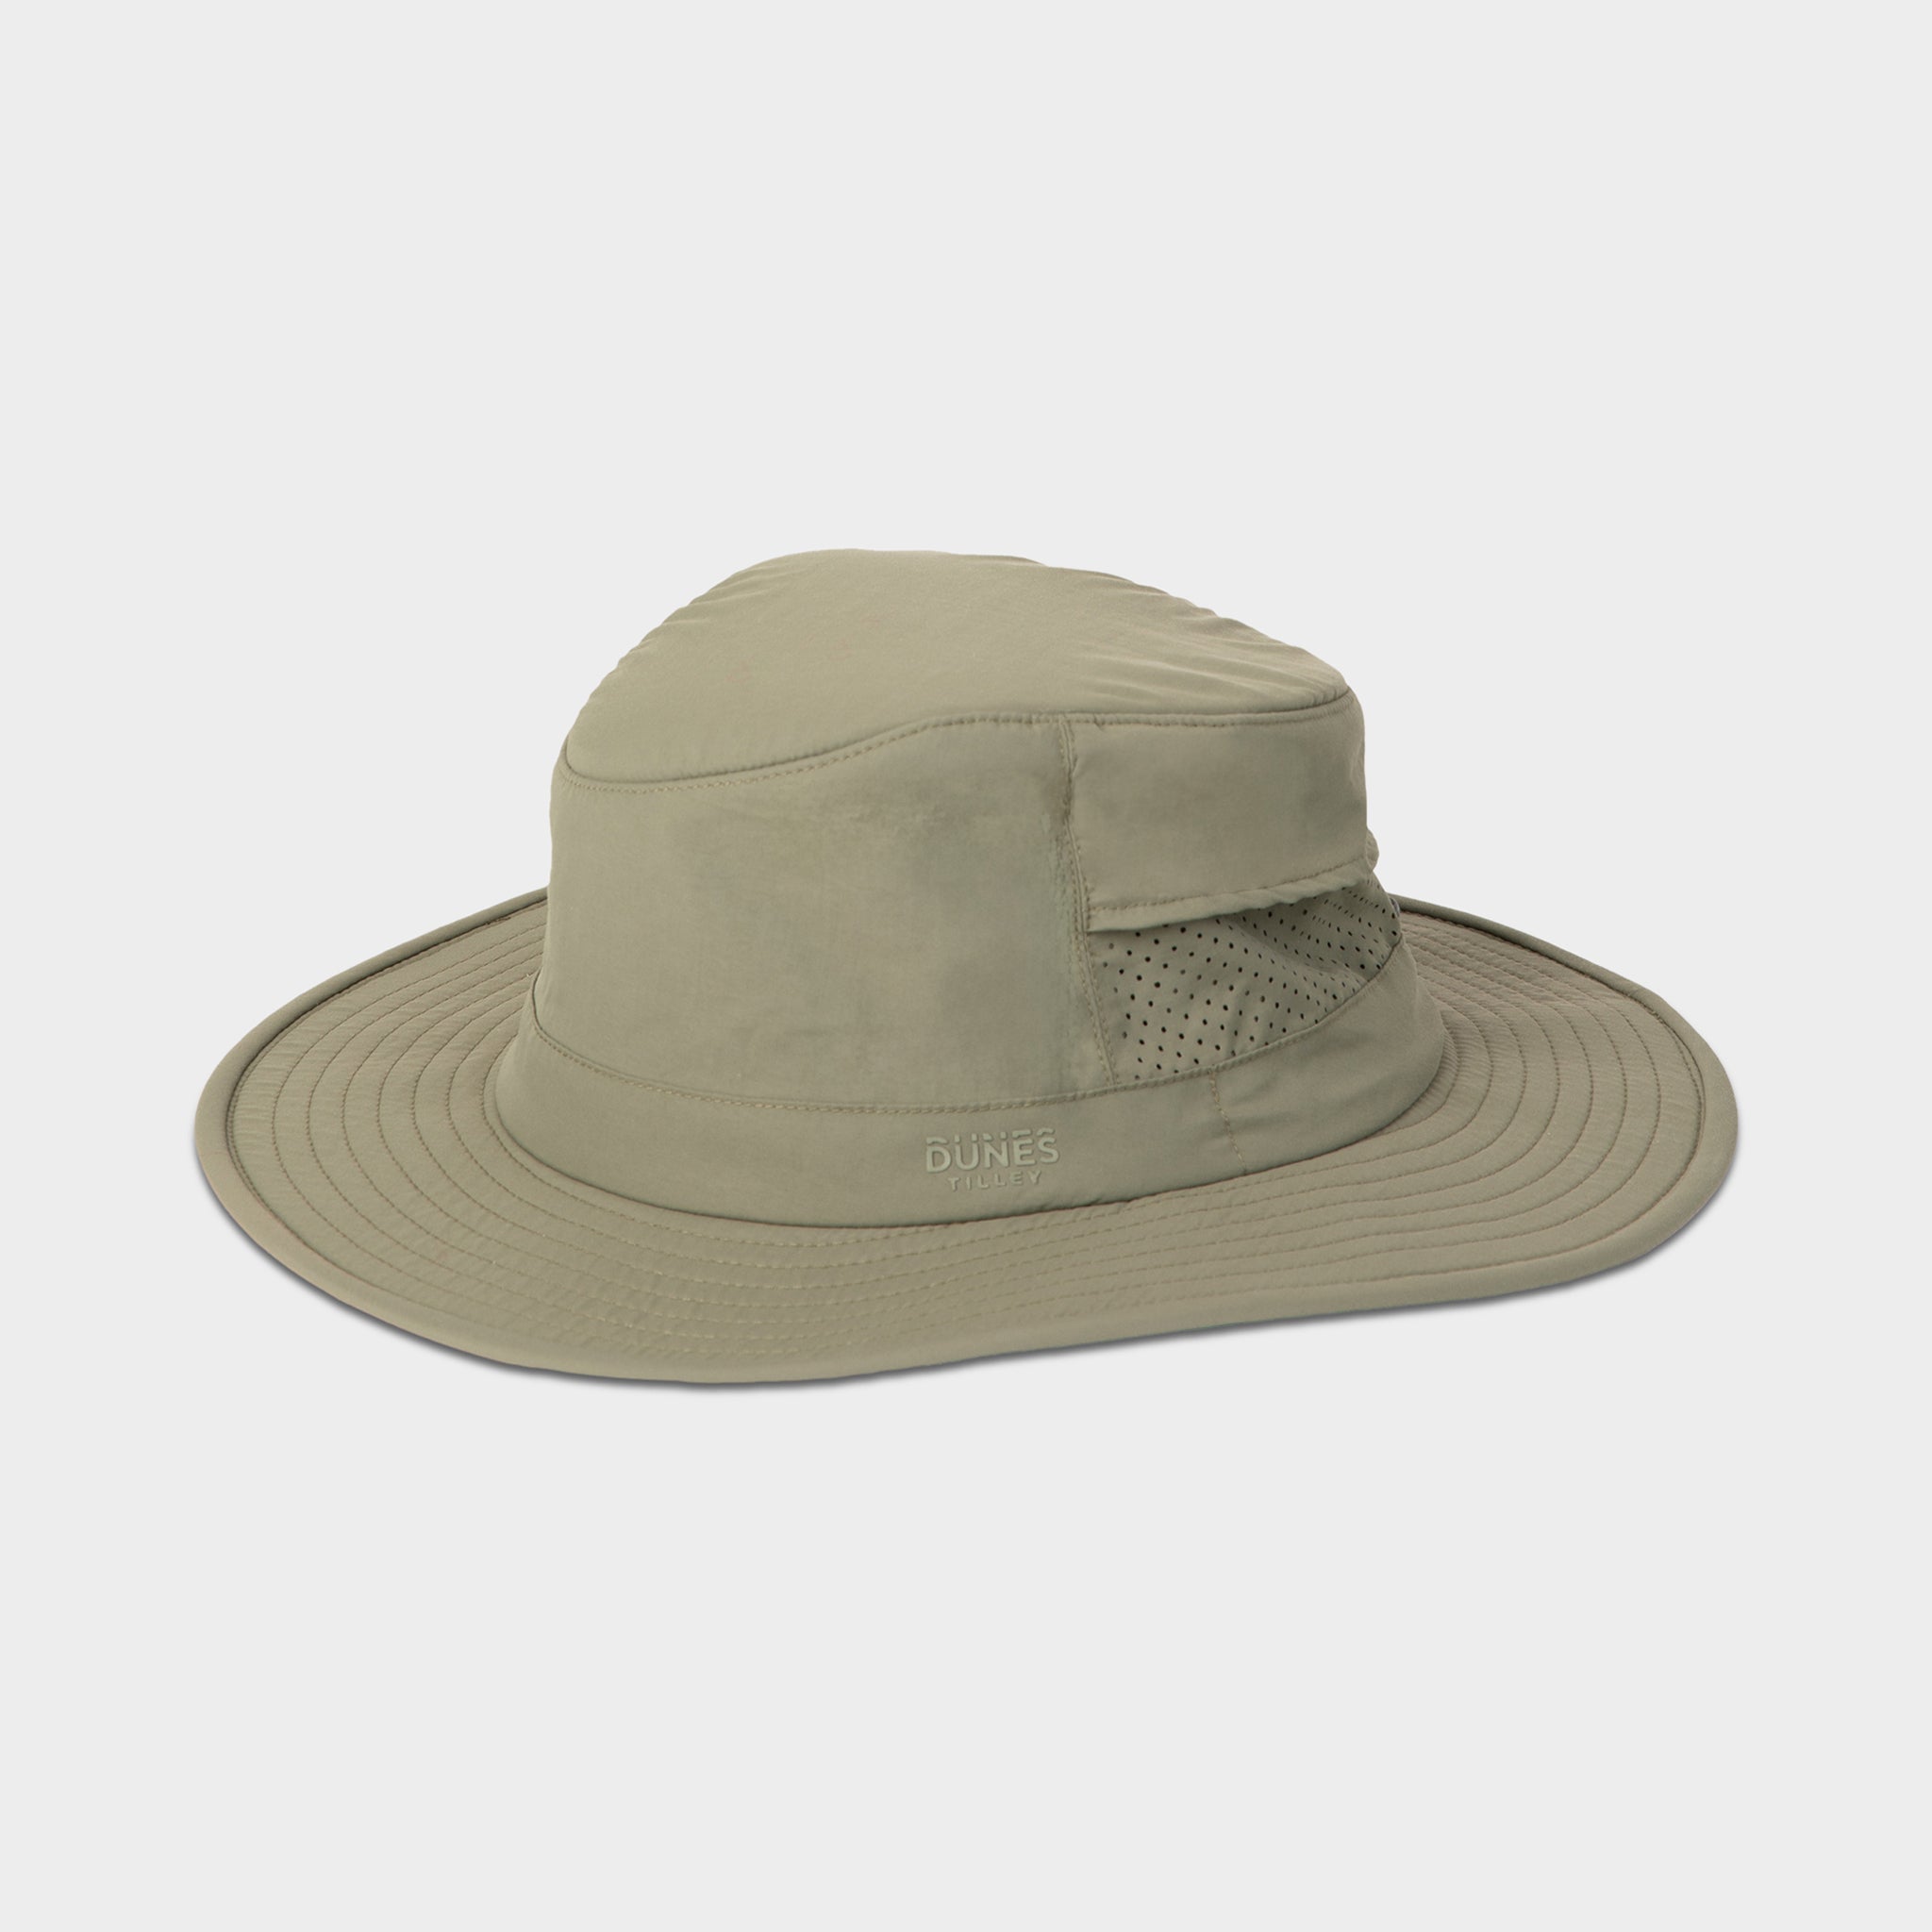 Size L - XL ( 58 - 60 cm ) Original COLUMBIA Bucket Hat., Men's